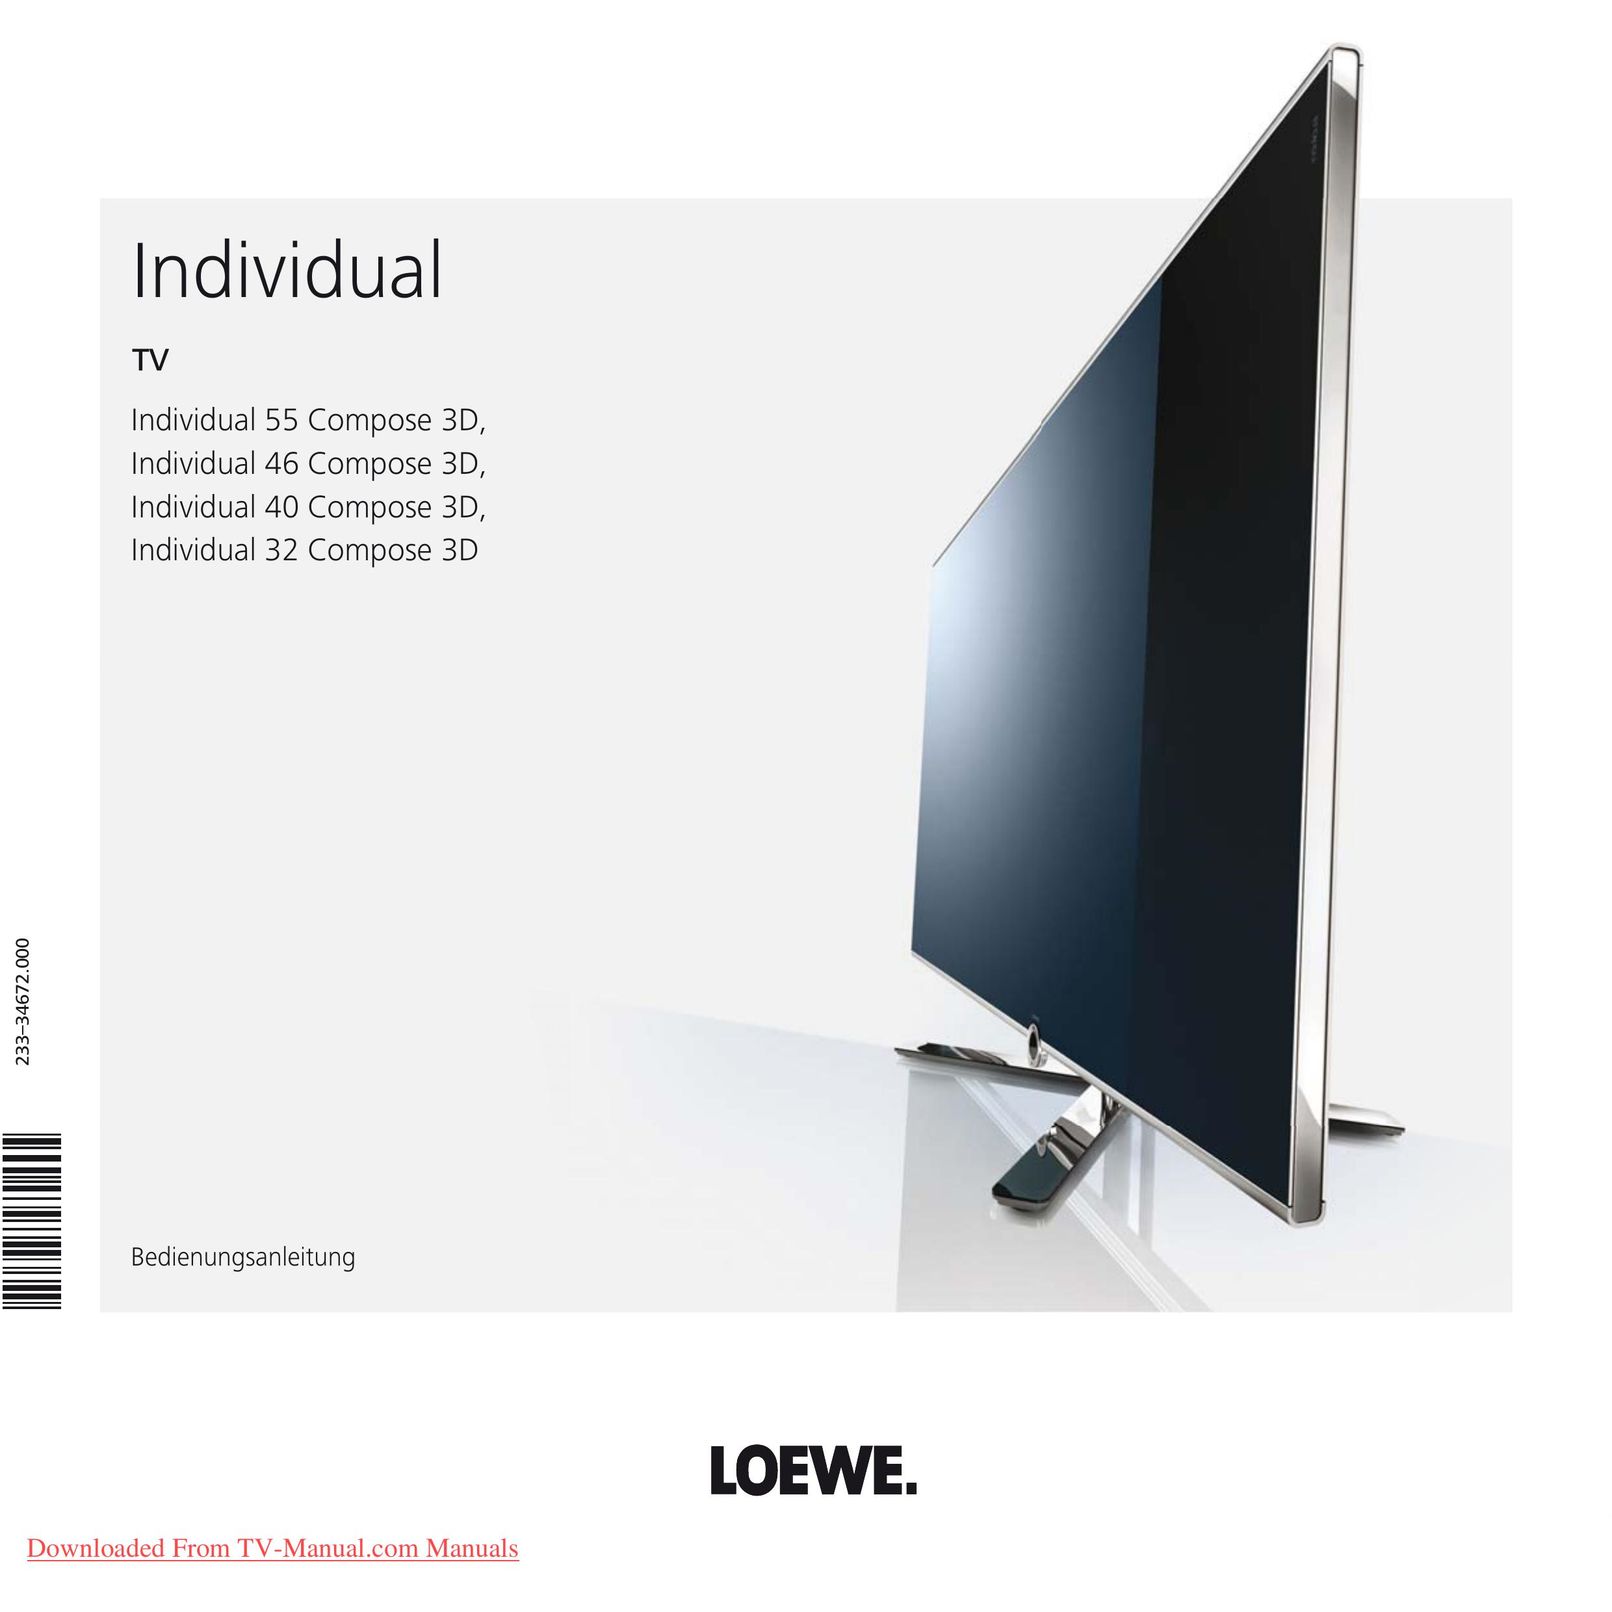 Loewe Individual 55 Compose 3D TV Antenna User Manual